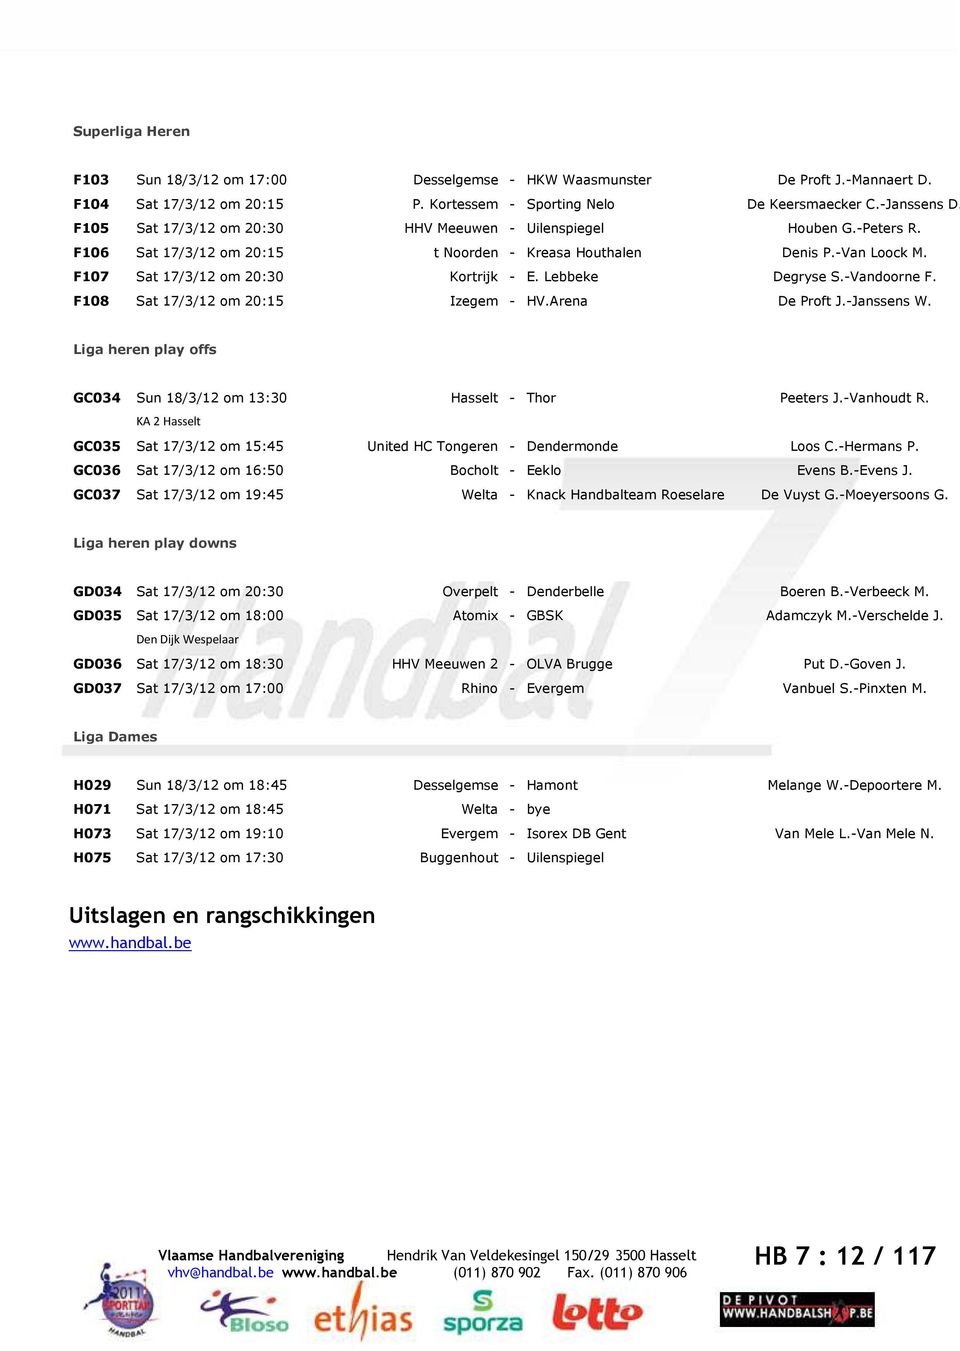 Lebbeke Degryse S.-Vandoorne F. F108 Sat 17/3/12 om 20:15 Izegem - HV.Arena De Proft J.-Janssens W. Liga heren play offs GC034 Sun 18/3/12 om 13:30 Hasselt - Thor Peeters J.-Vanhoudt R.